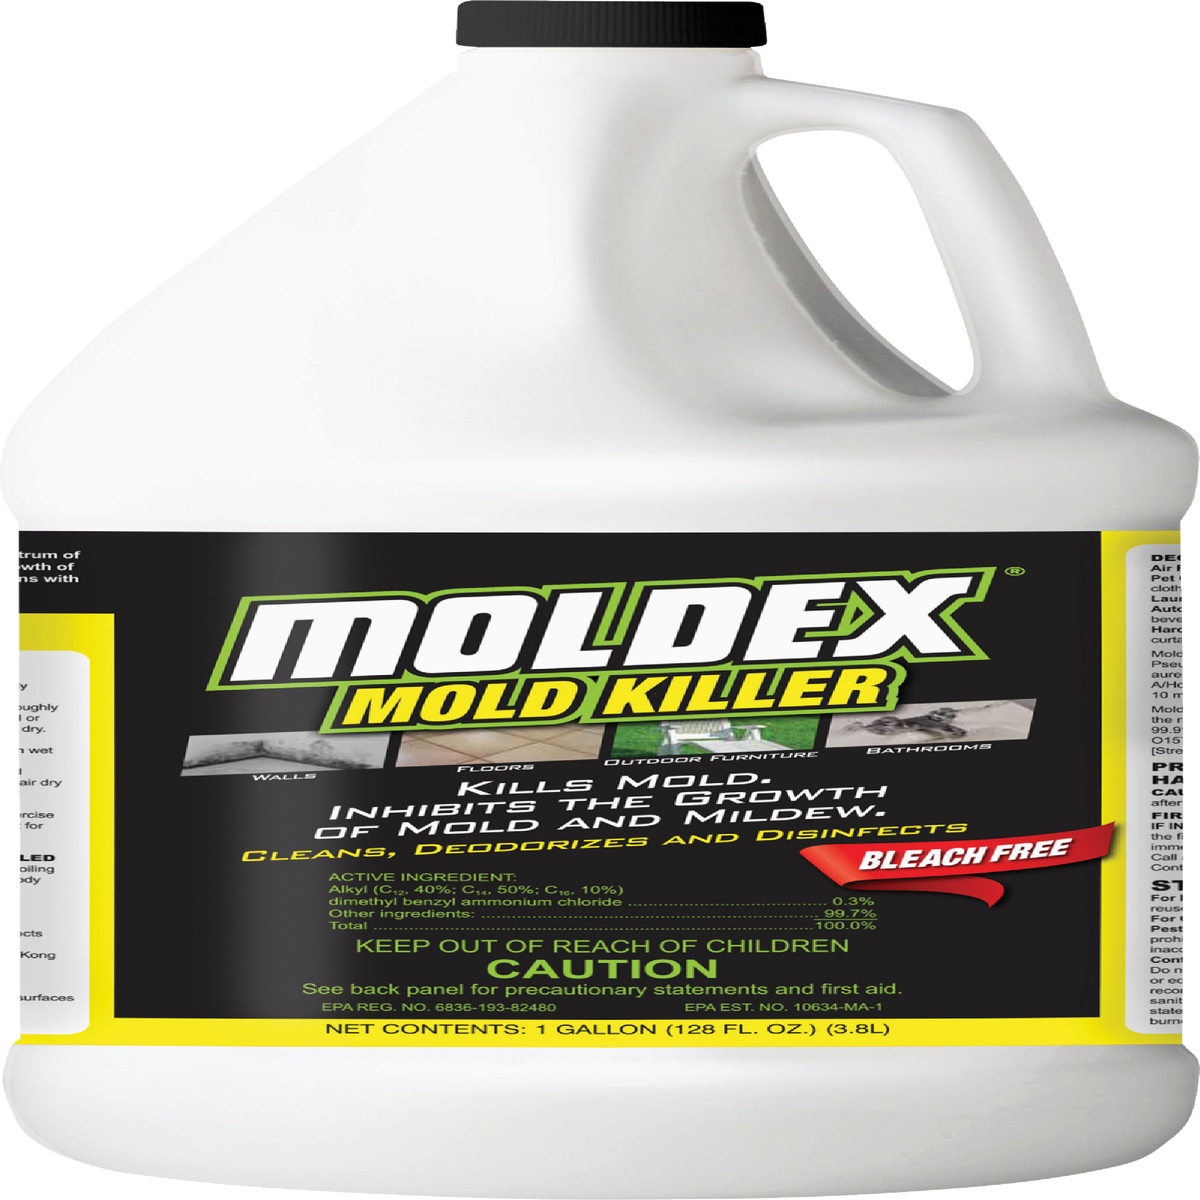 Mold Inhibitor